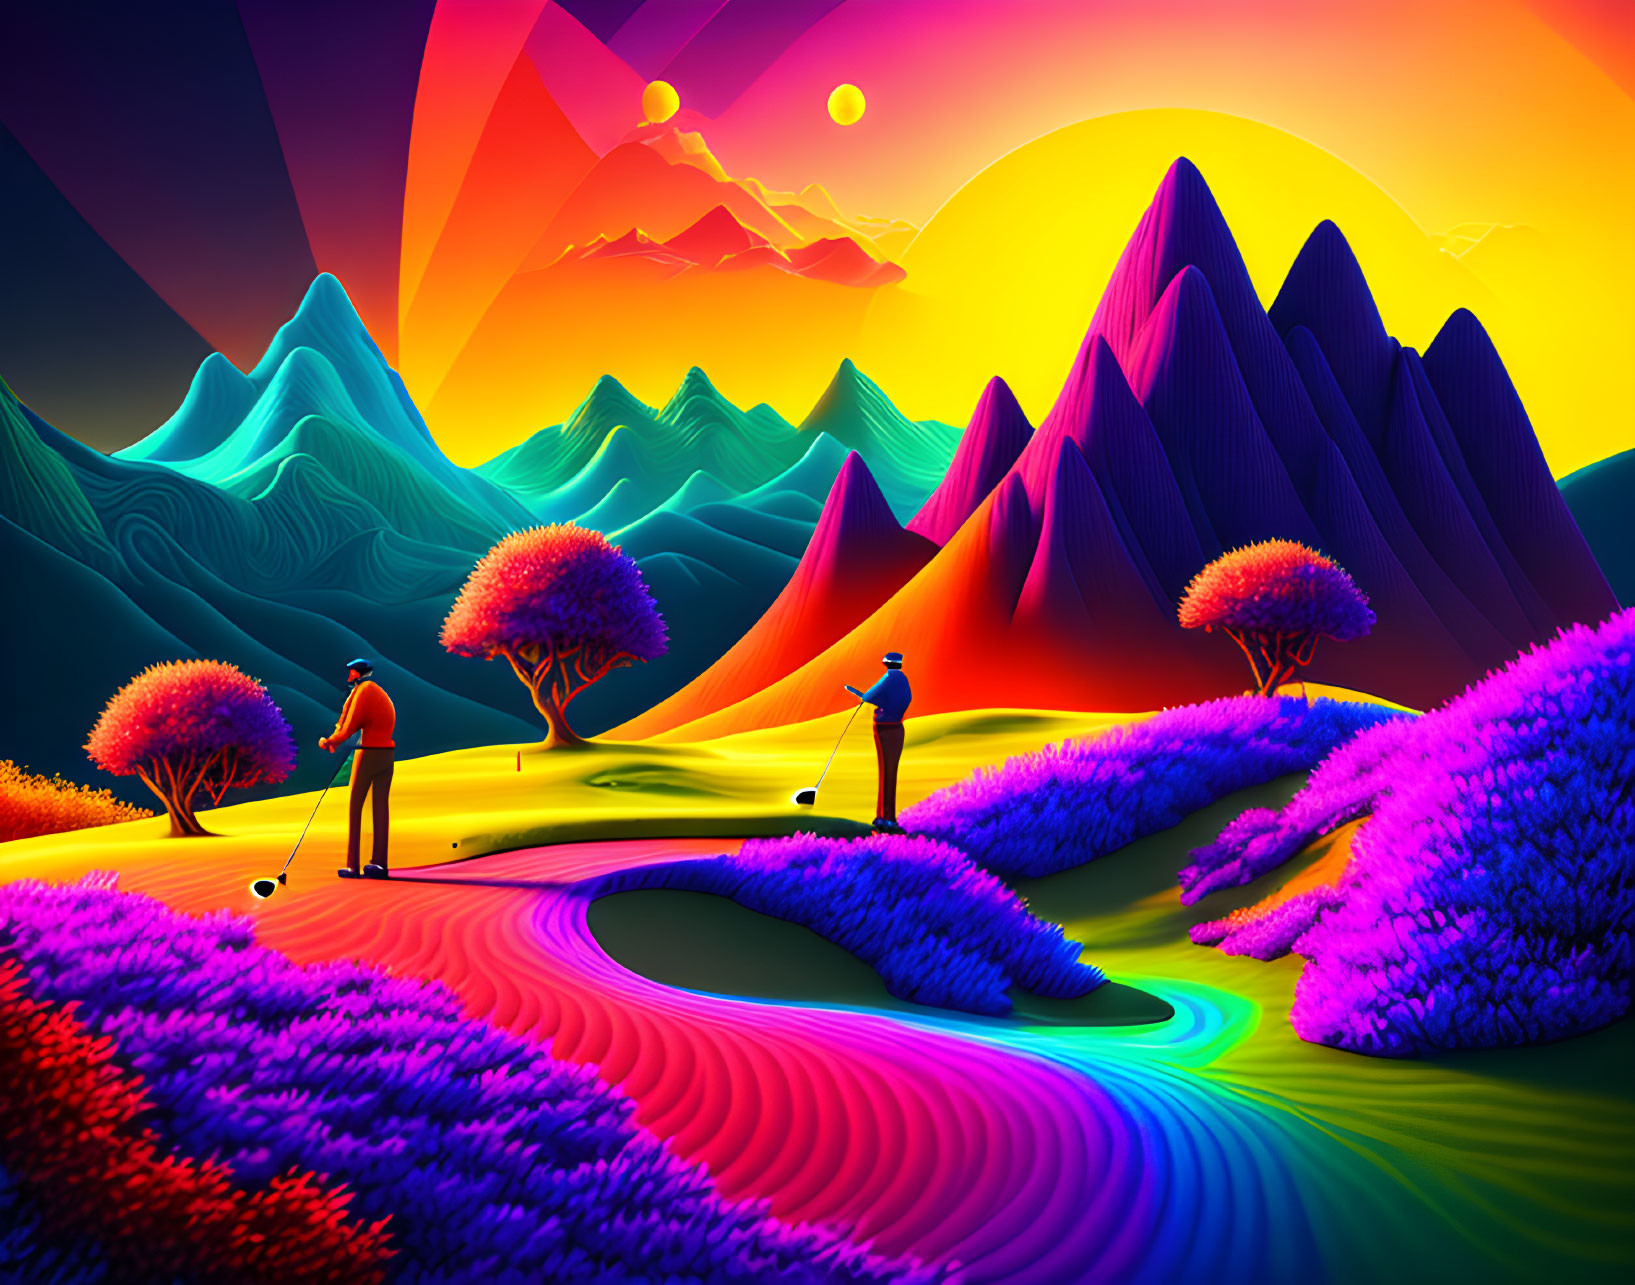 Colorful digital artwork of two people golfing in surreal landscape